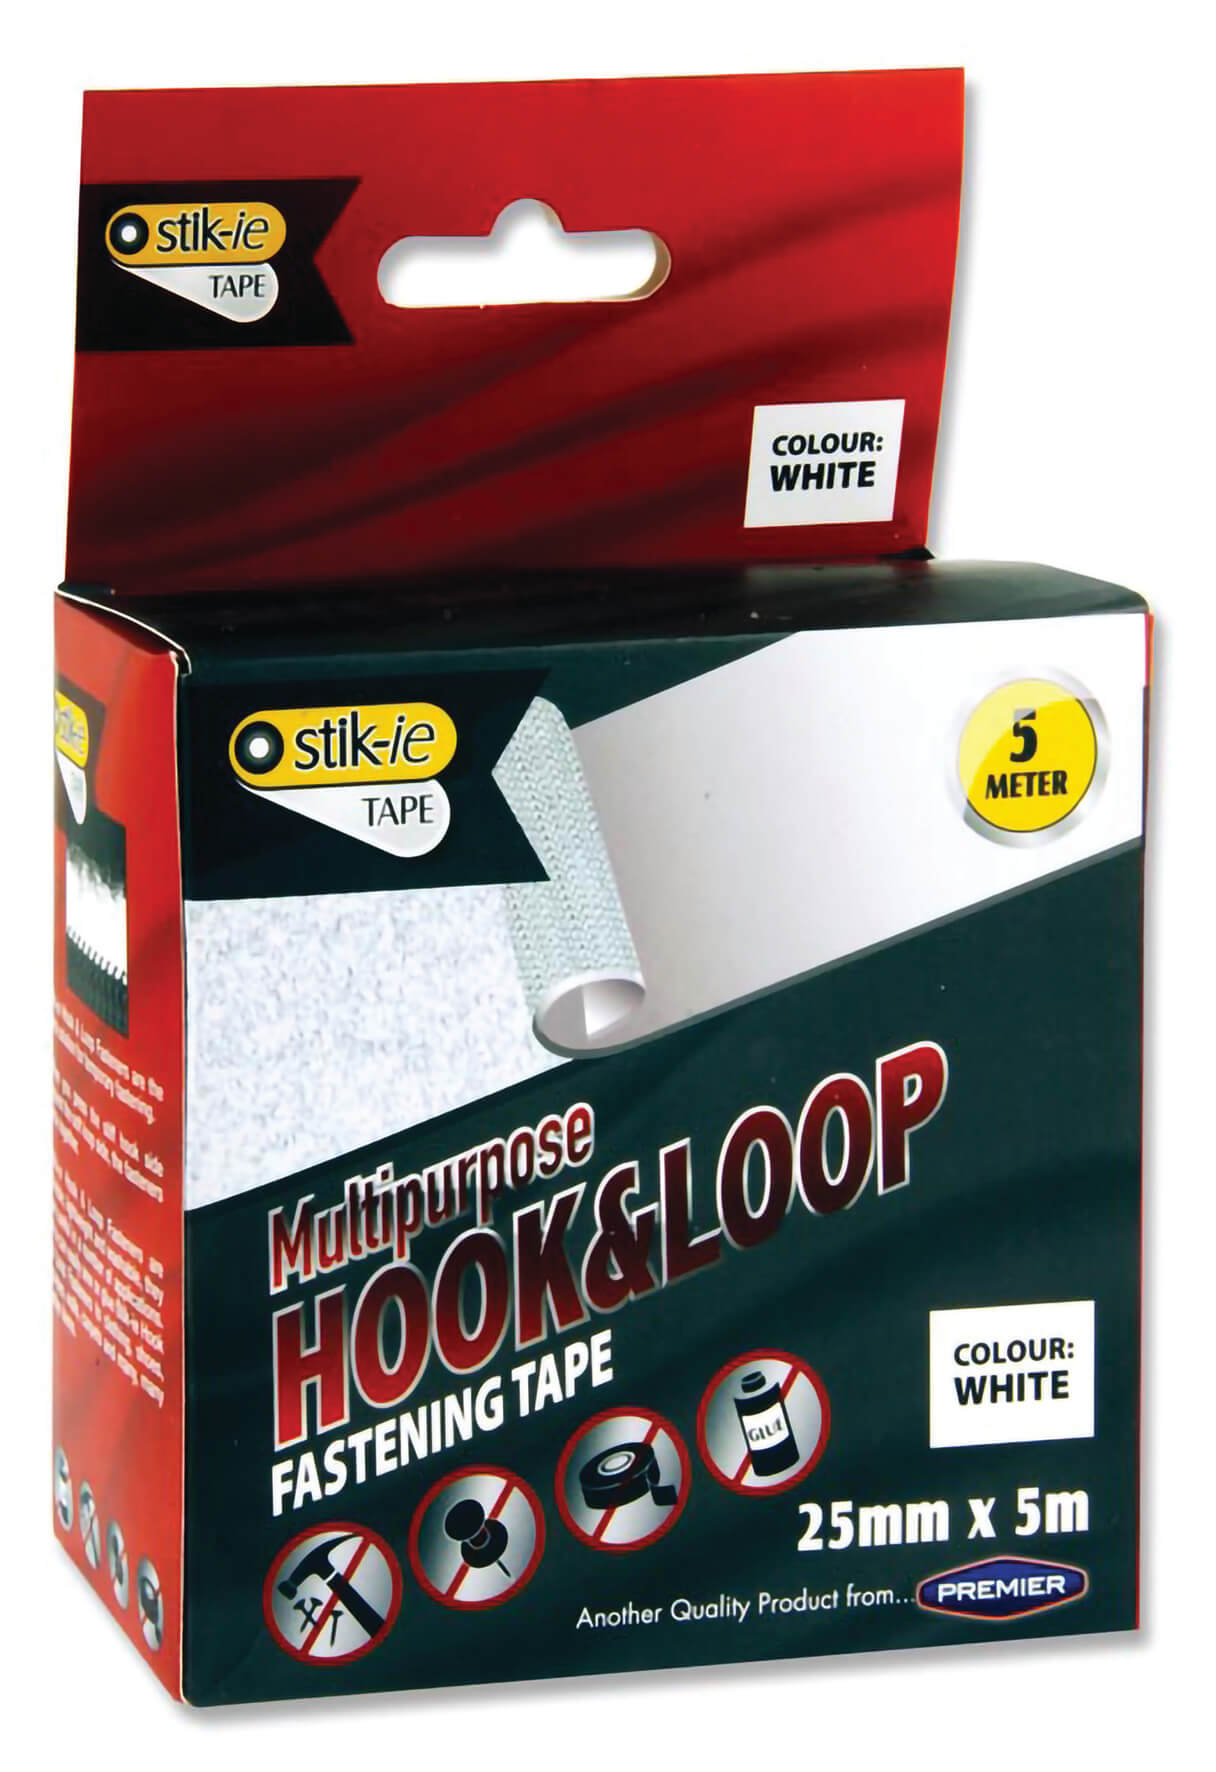 Hook & Loop Fastening Tape, White - 5m roll x 25mm